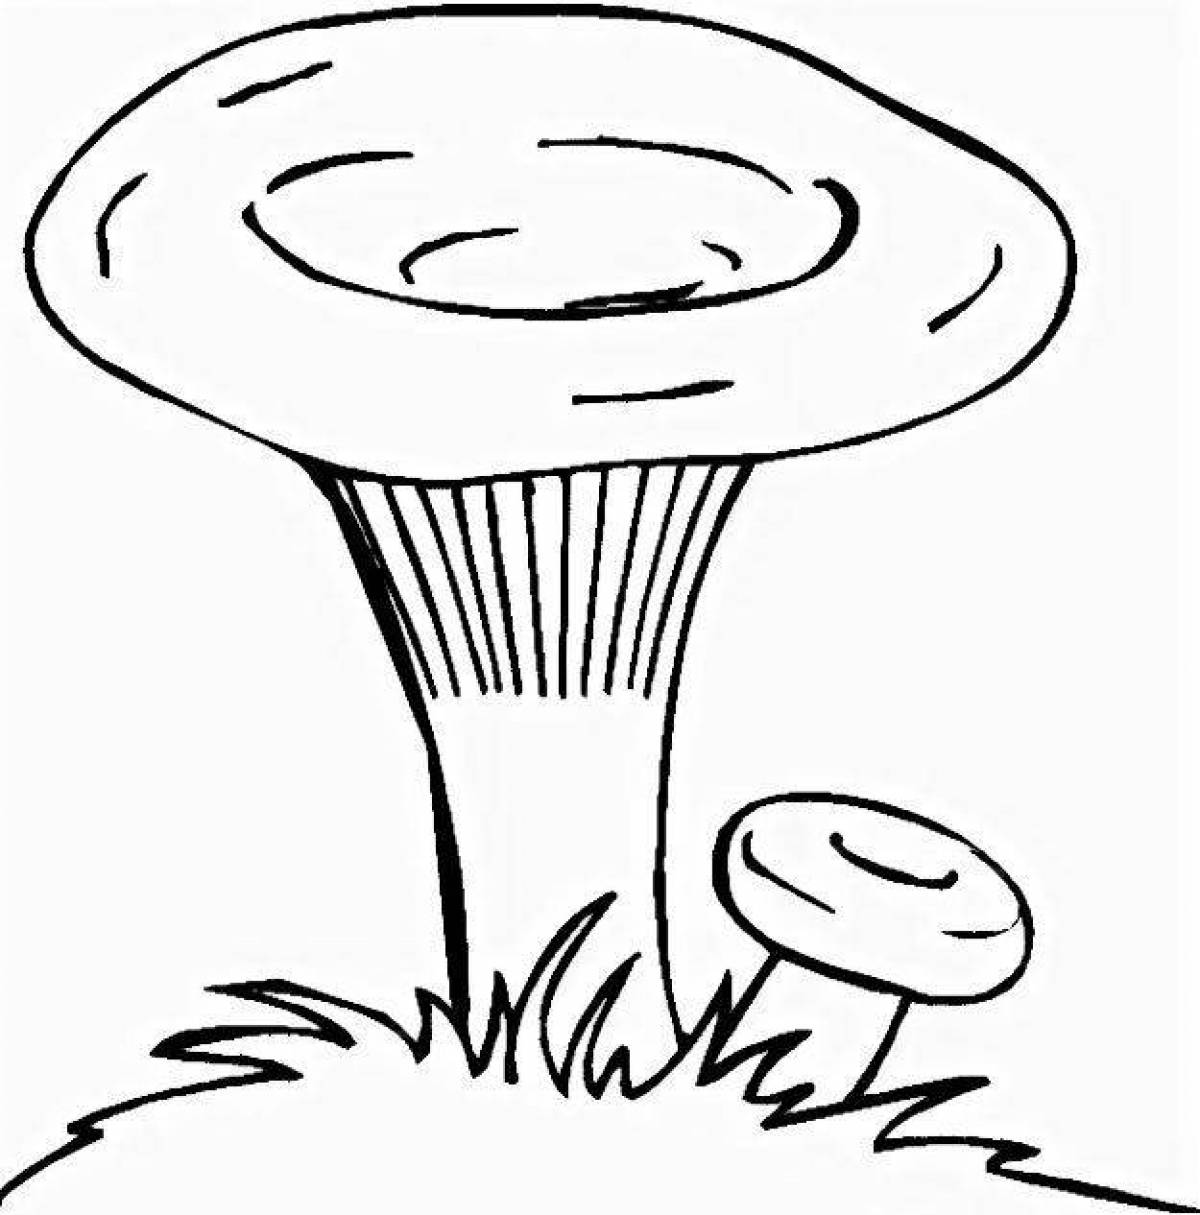 Sweet mushroom coloring book for kids